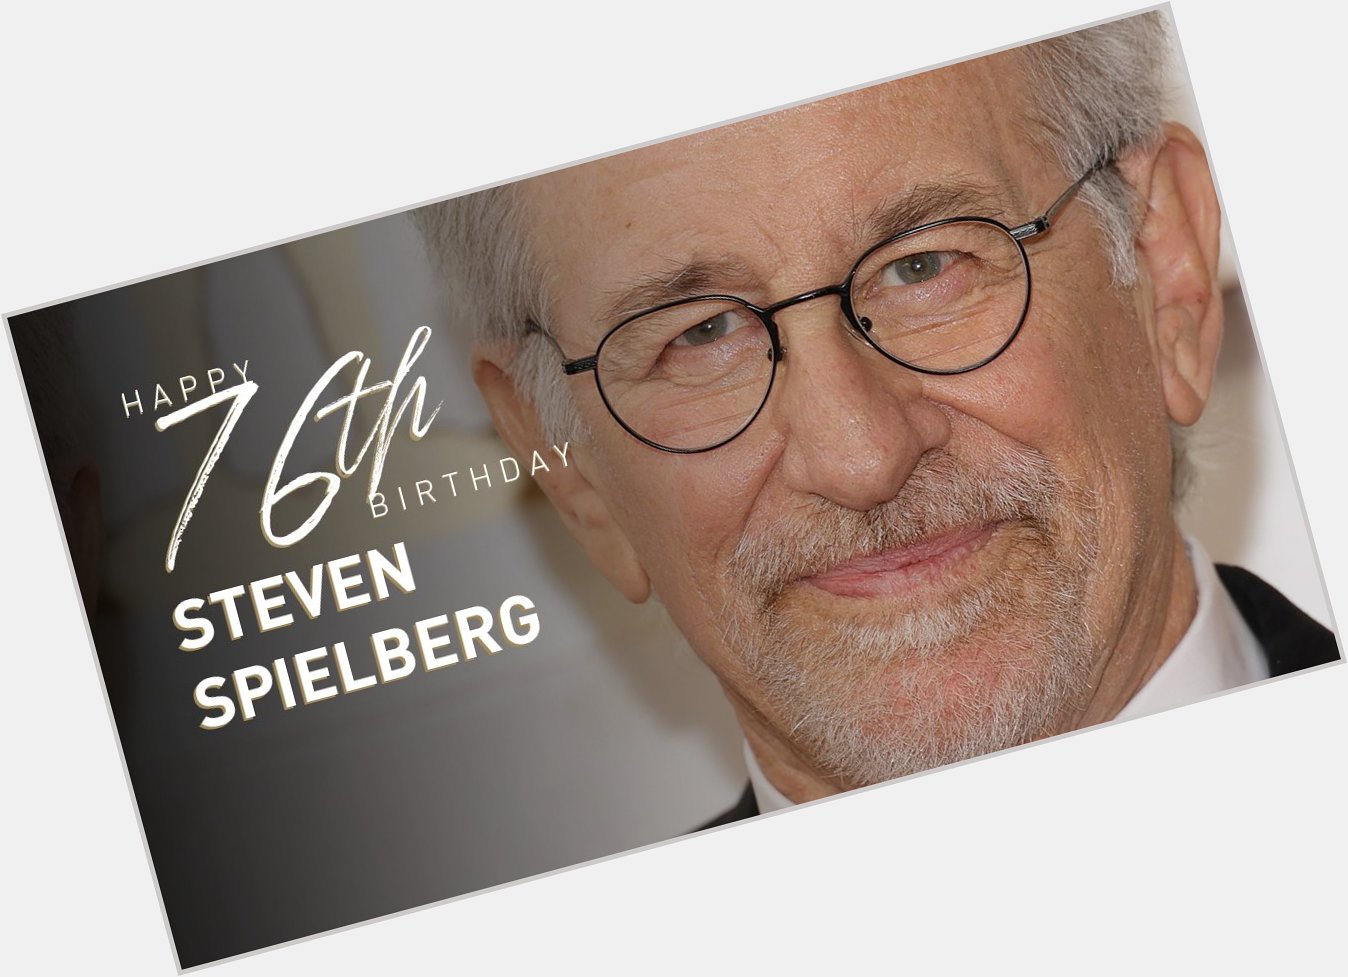 Happy birthday Steven Spielberg!

Read his bio here:  